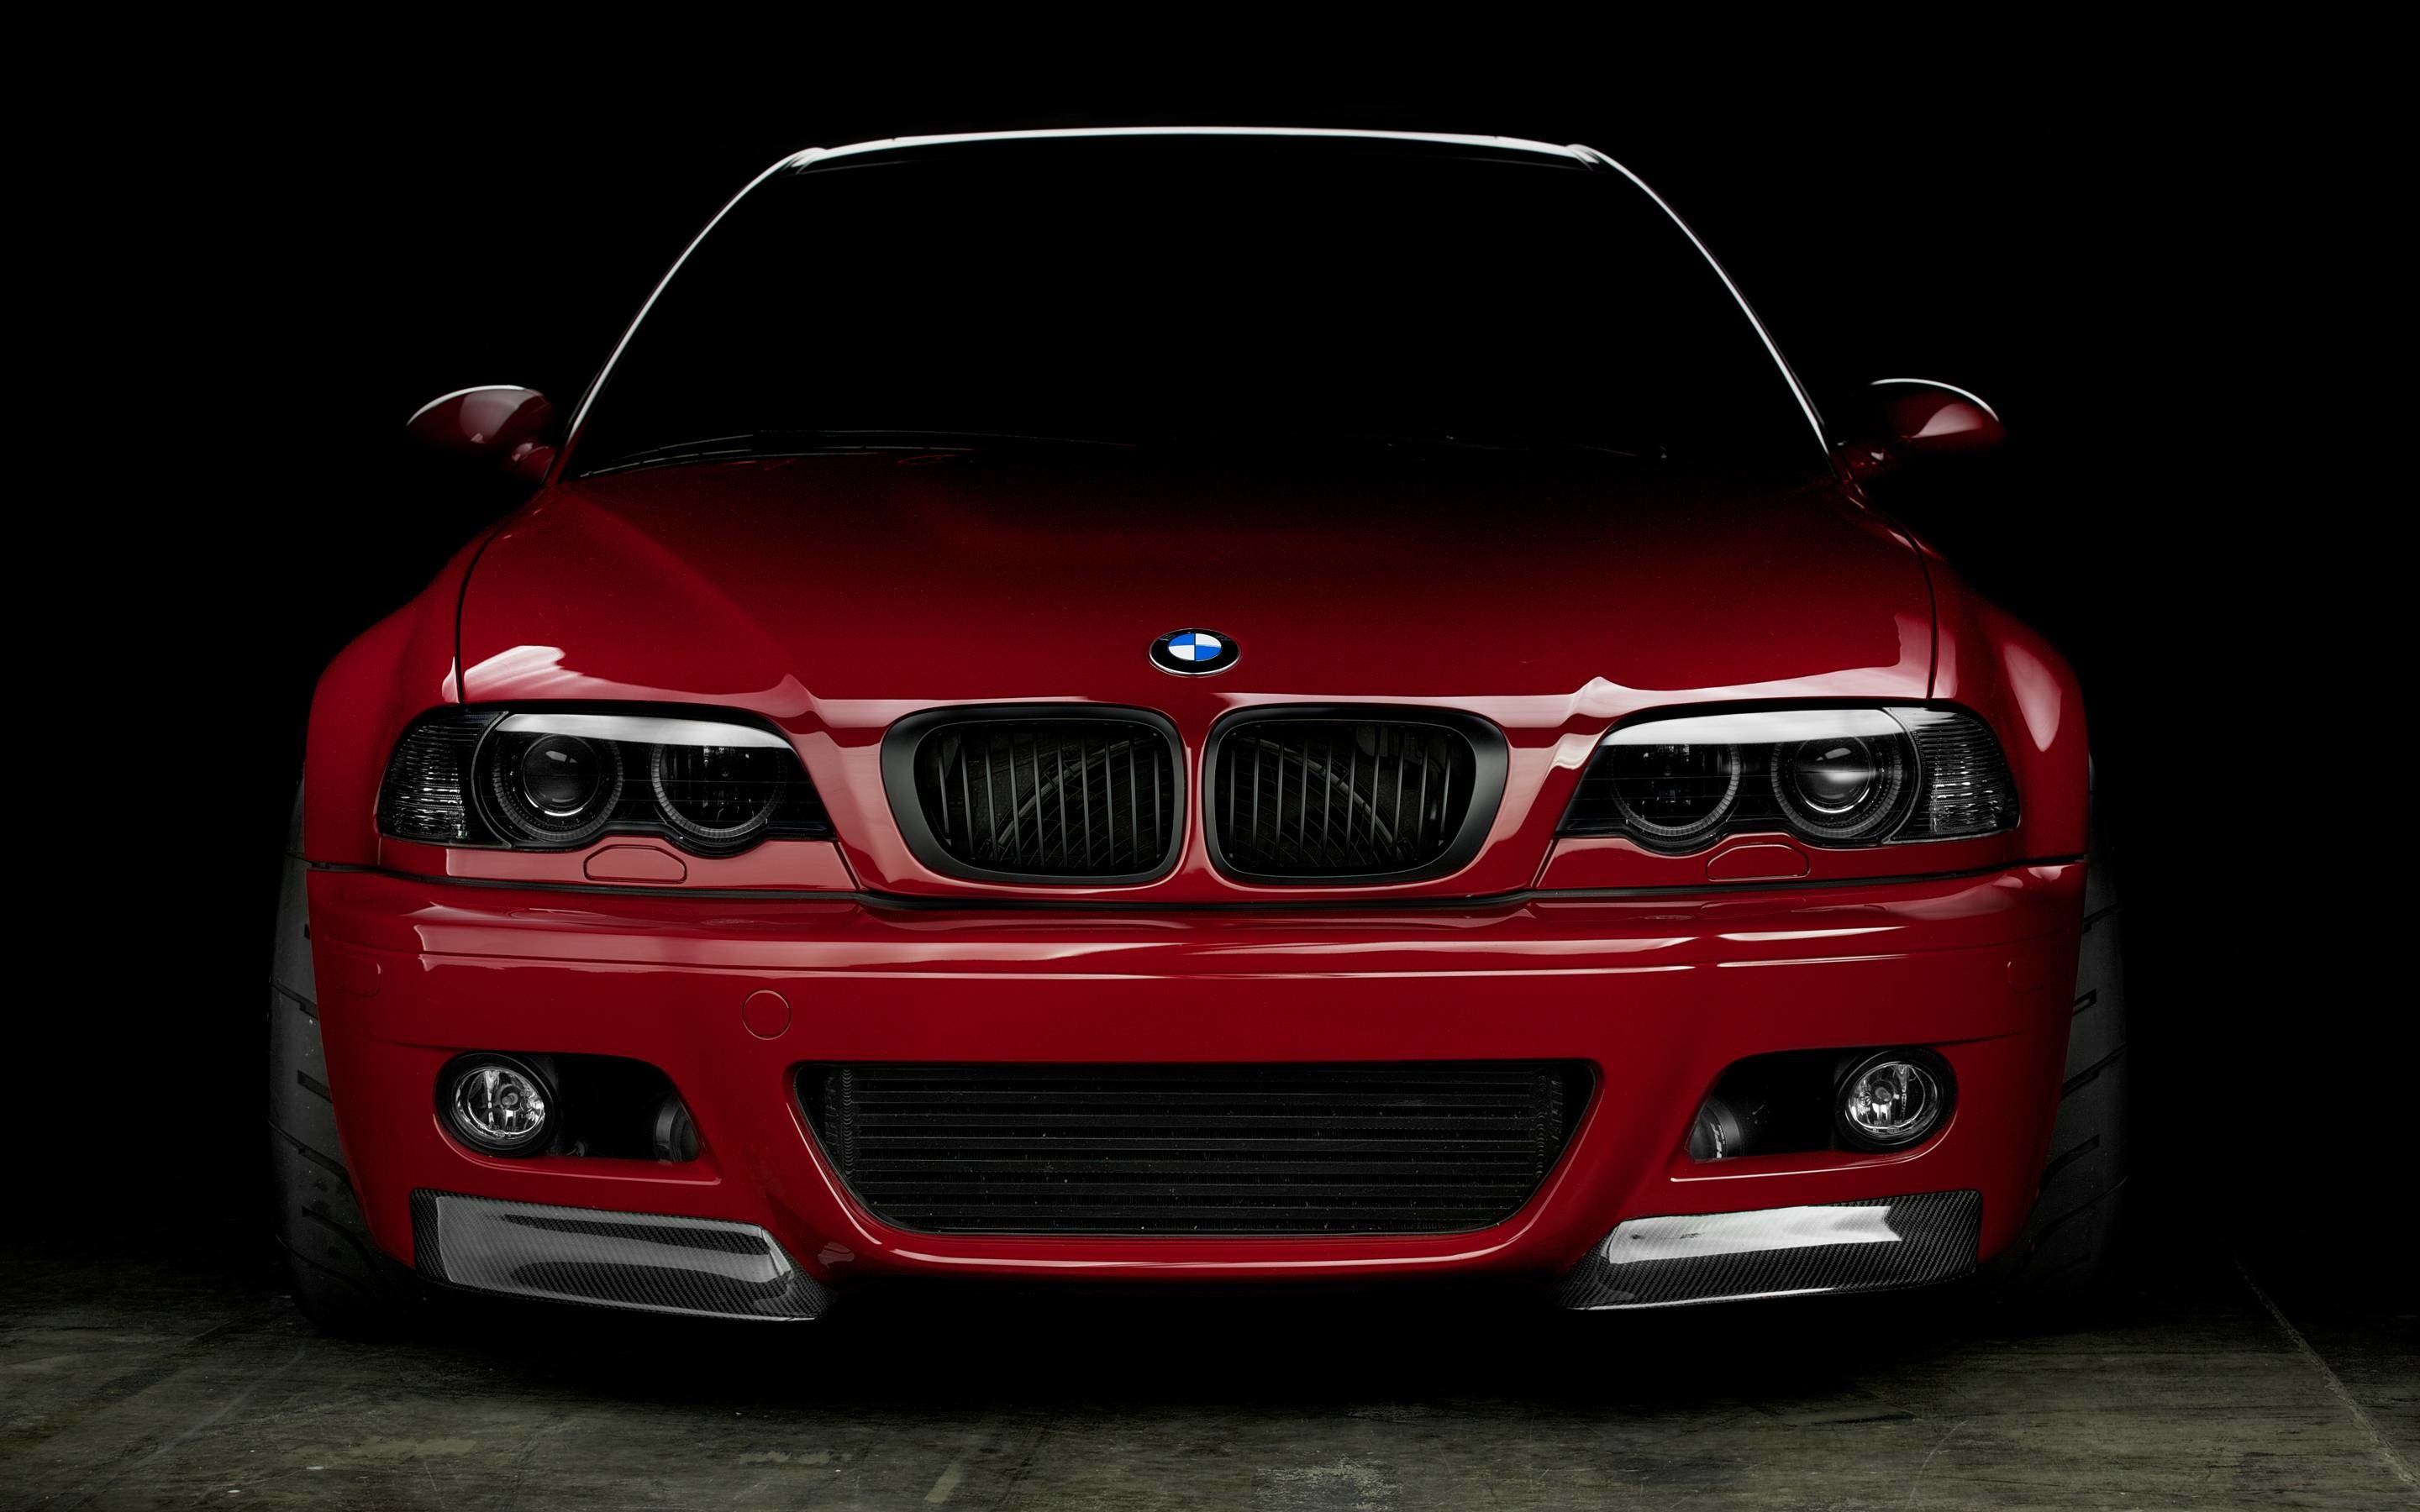 2880x1800 APEX Wallpaper – Imola Red BMW E46 M3